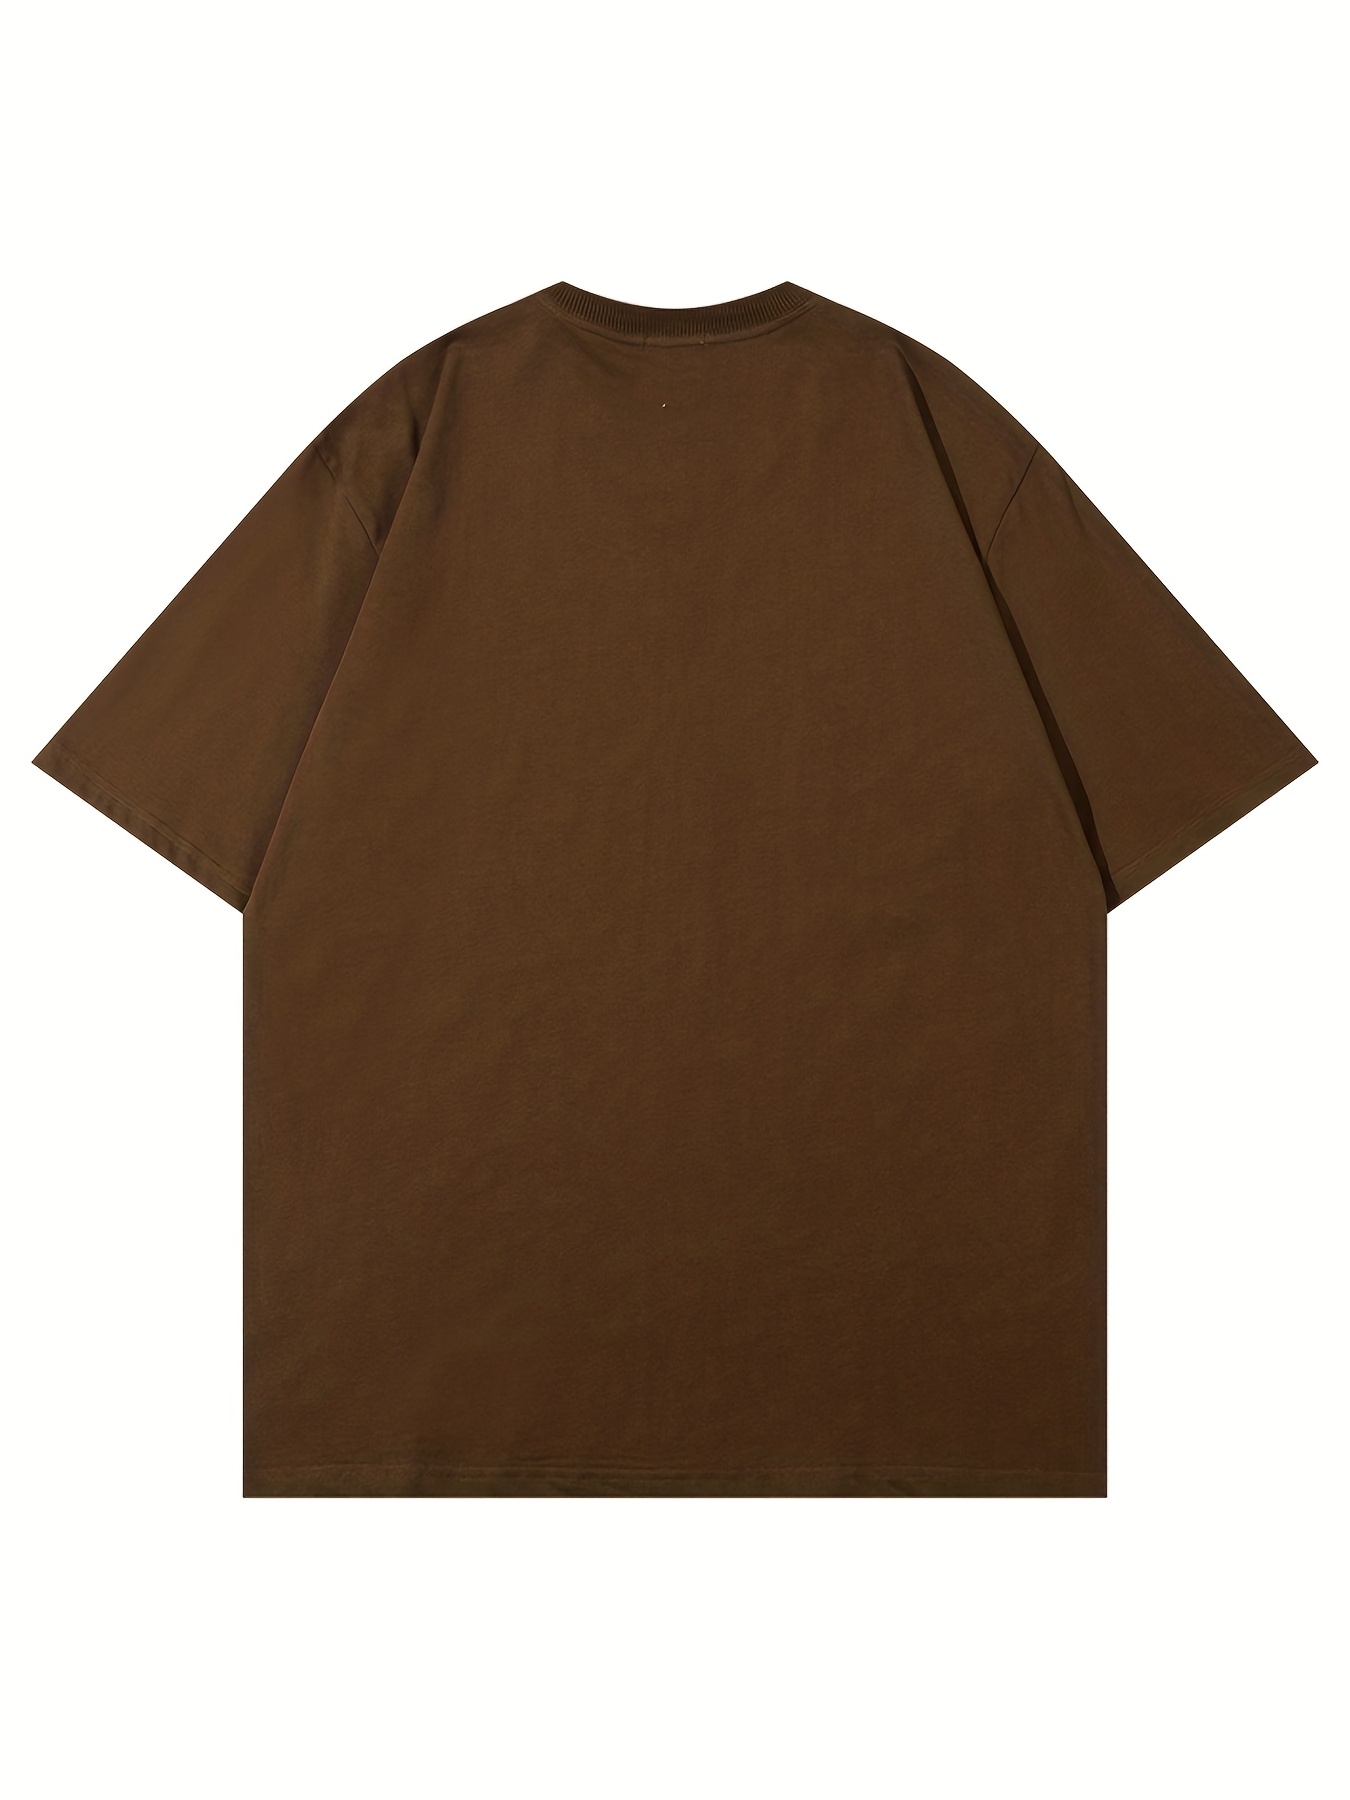 Unisex Button up Shirt Cotton Blouse Streetwear for Summer 